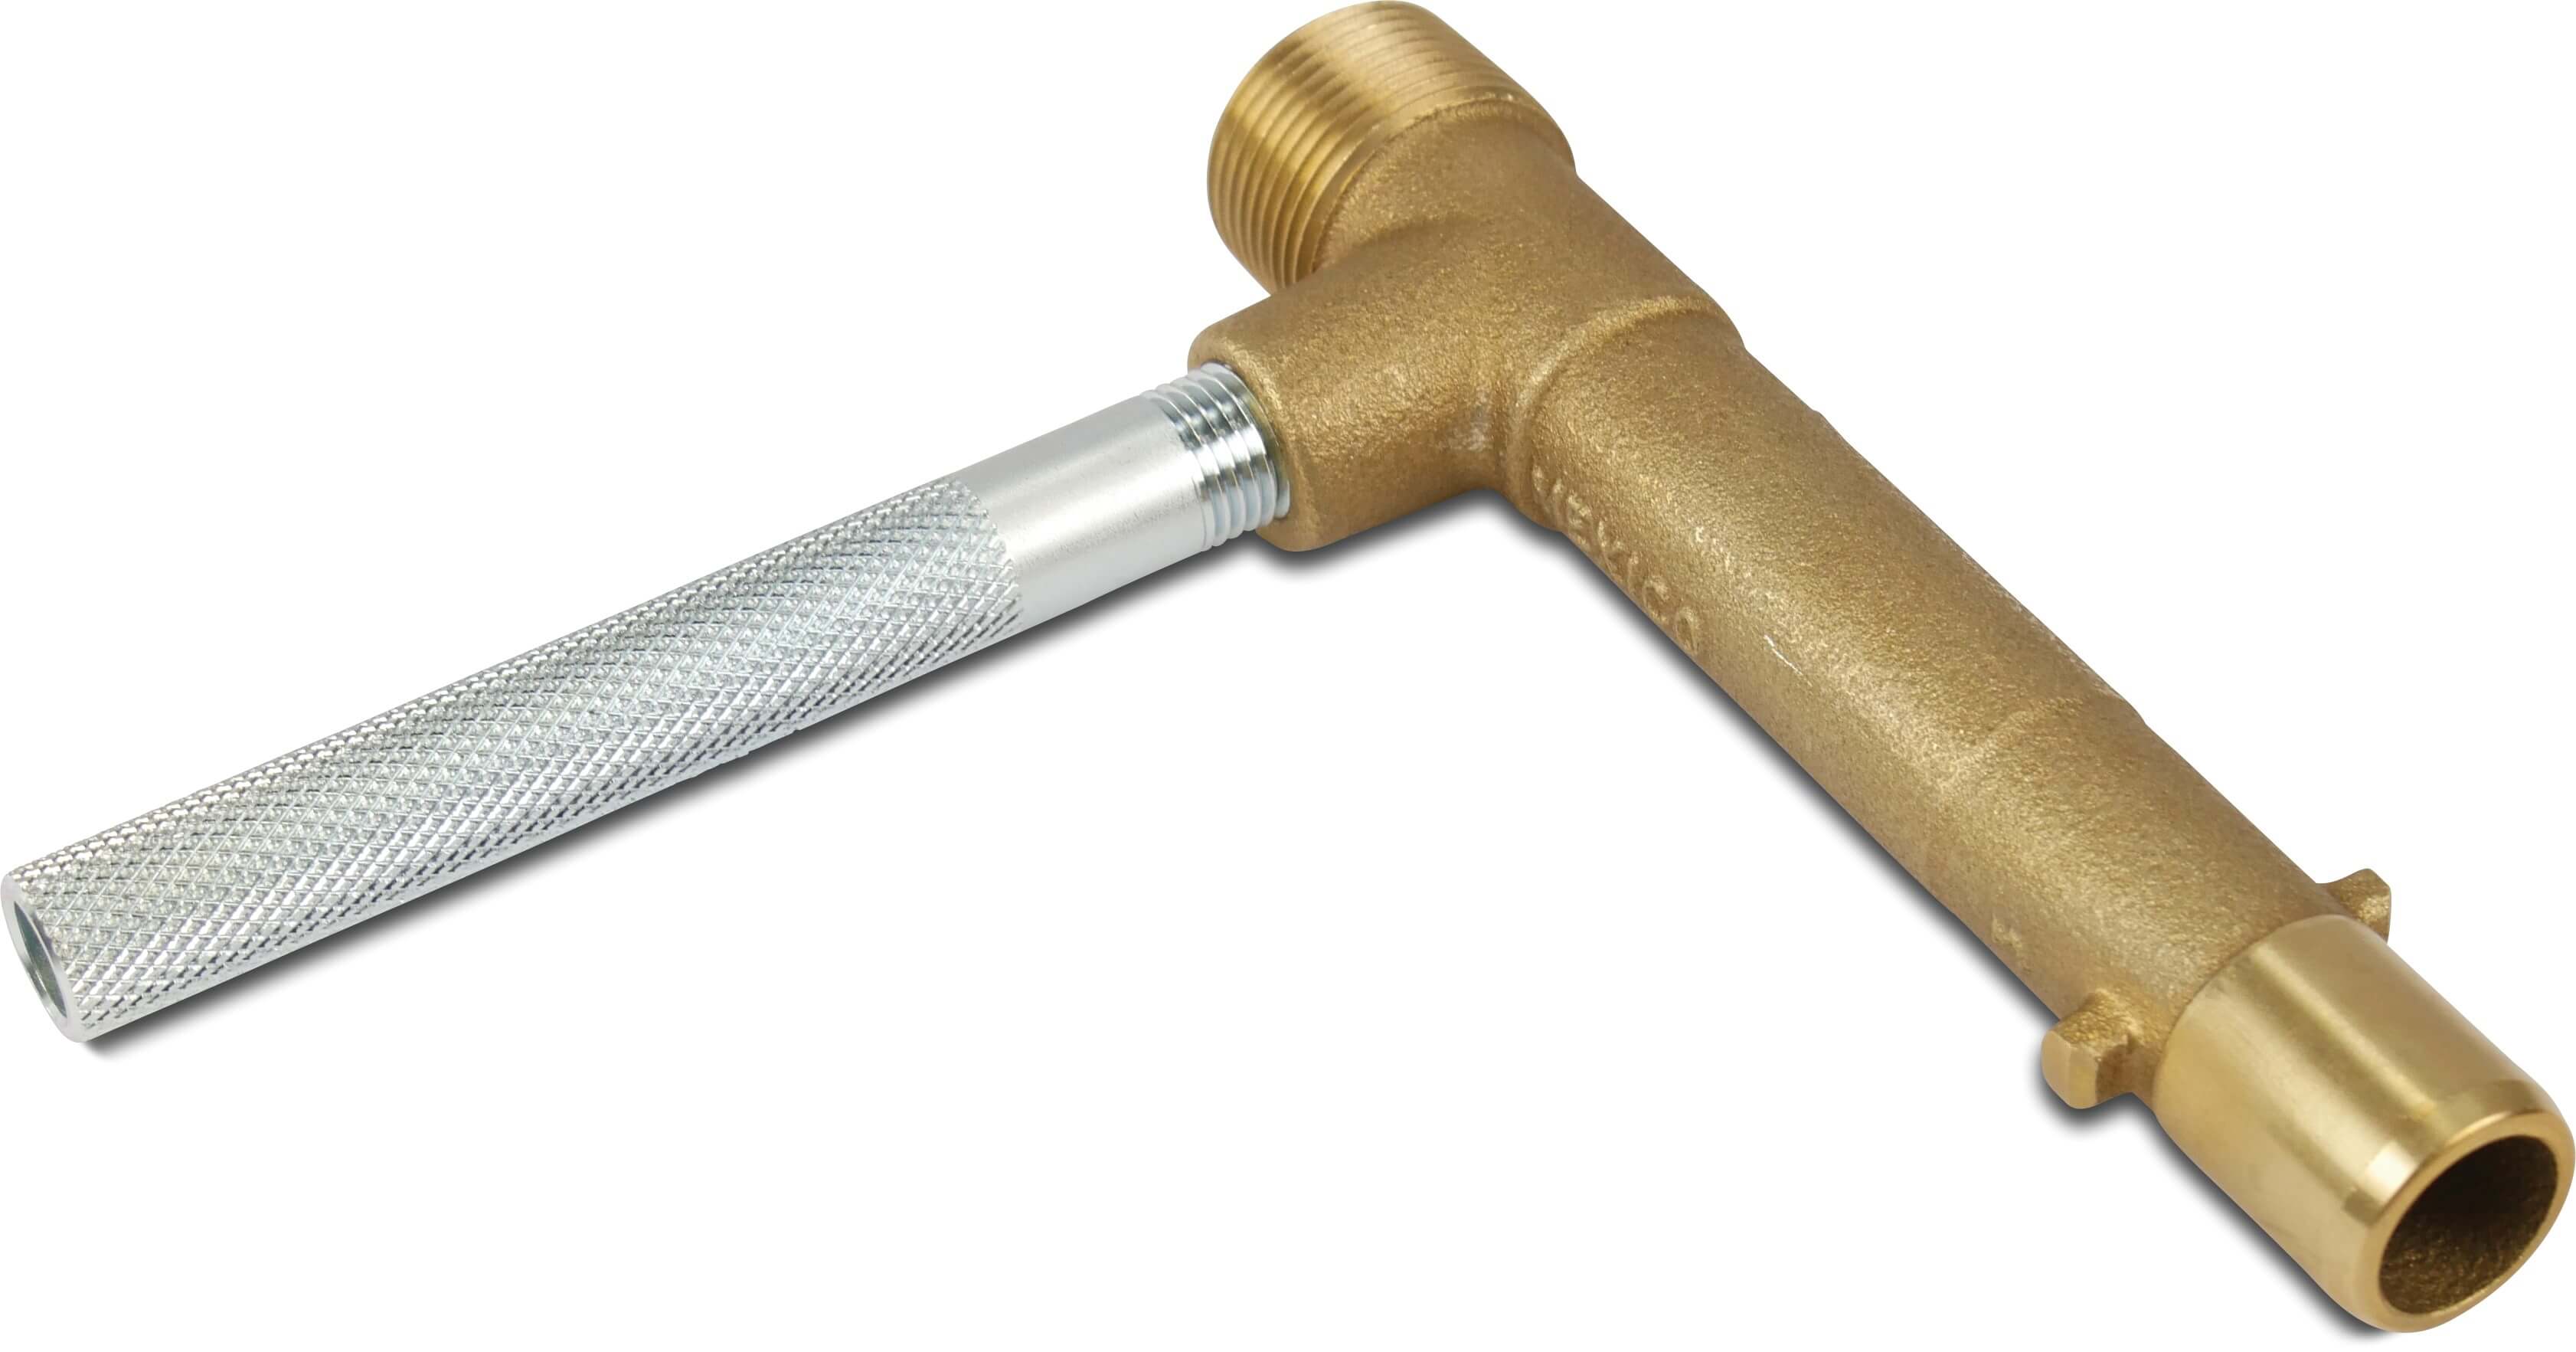 Rain Bird Riser valve key brass 3/4" female thread type 33DK